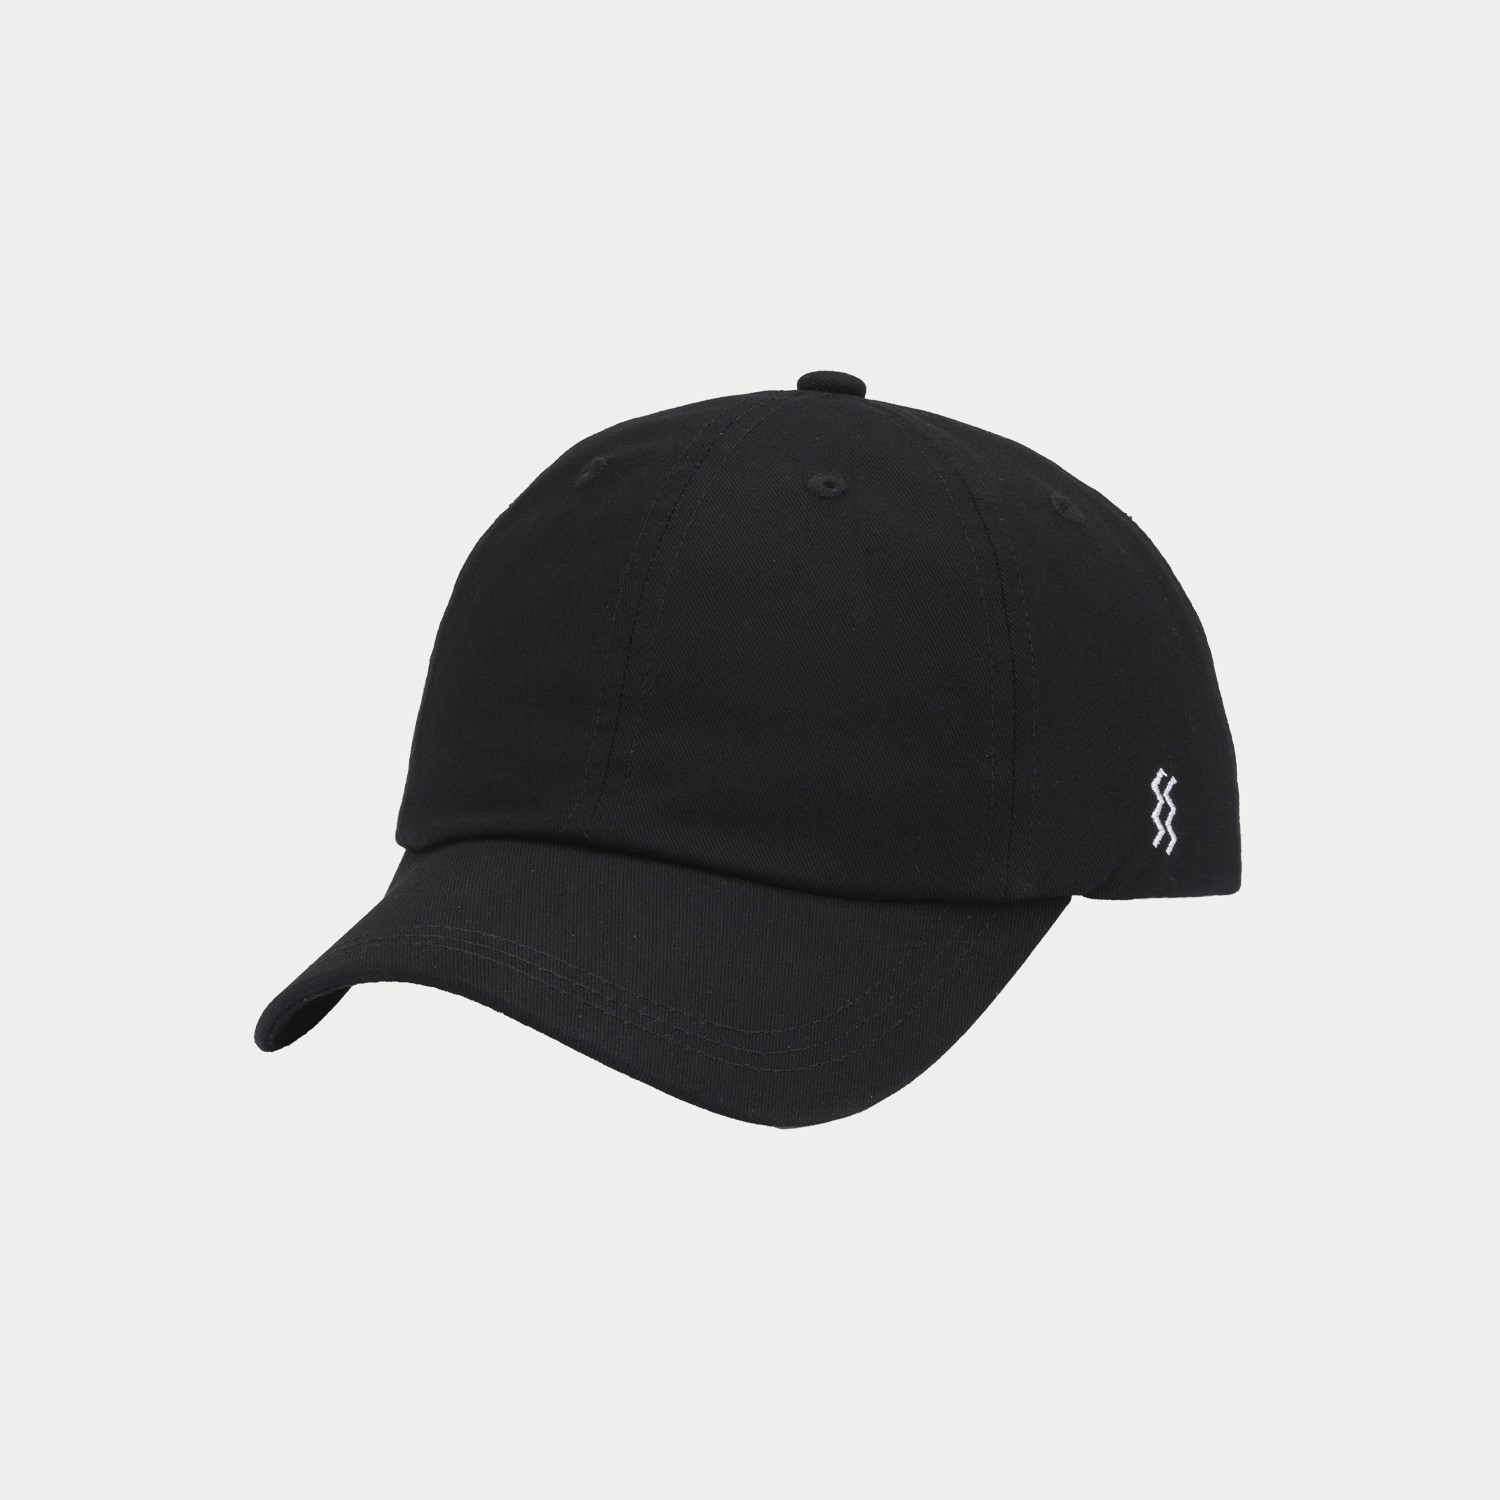 Hagen Pamuklu Ayarlanabilir Kep Şapka - Siyah